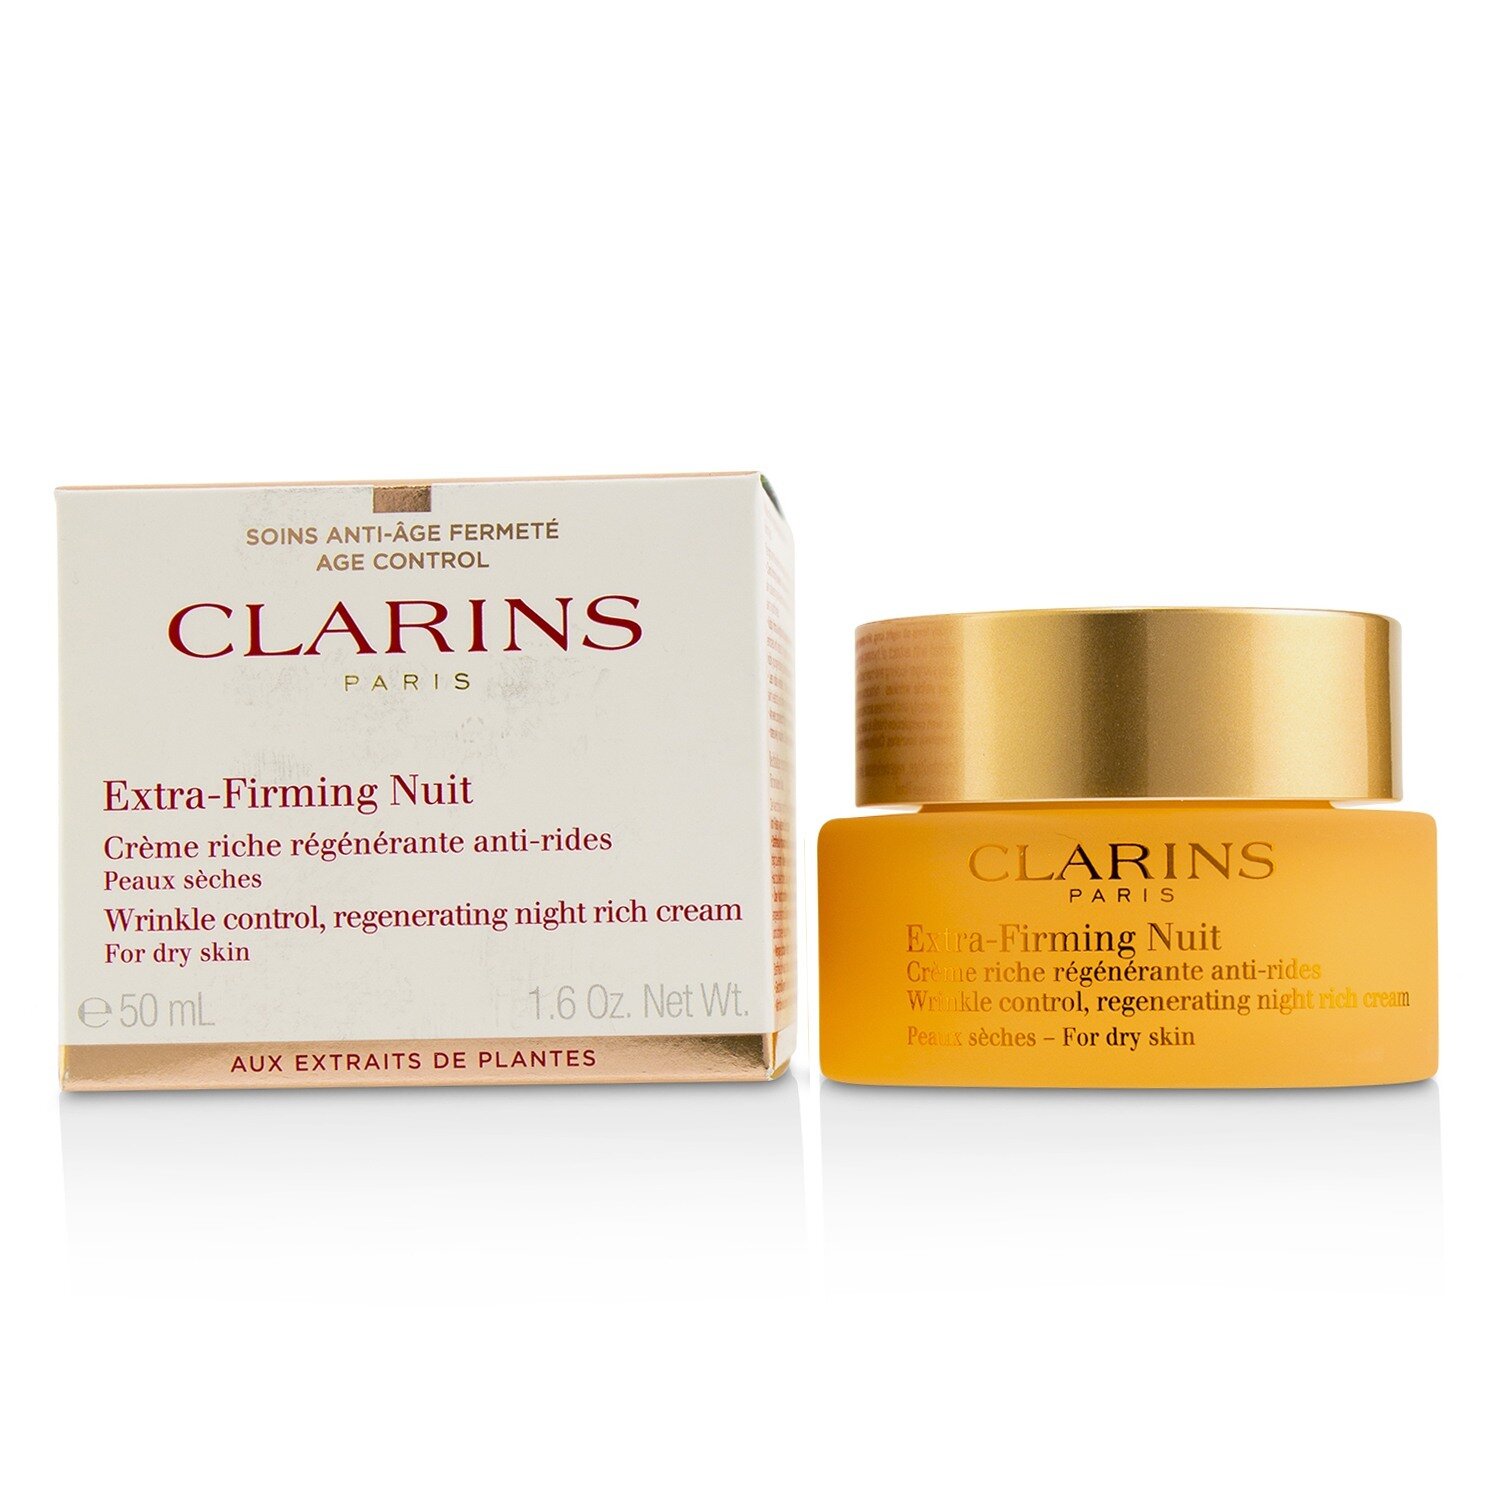 克蘭詩 Clarins - 抗皺晚霜-乾燥皮膚適用 Extra-Firming Nuit Wrinkle Control, Regenerating Night Rich Cream 50ml